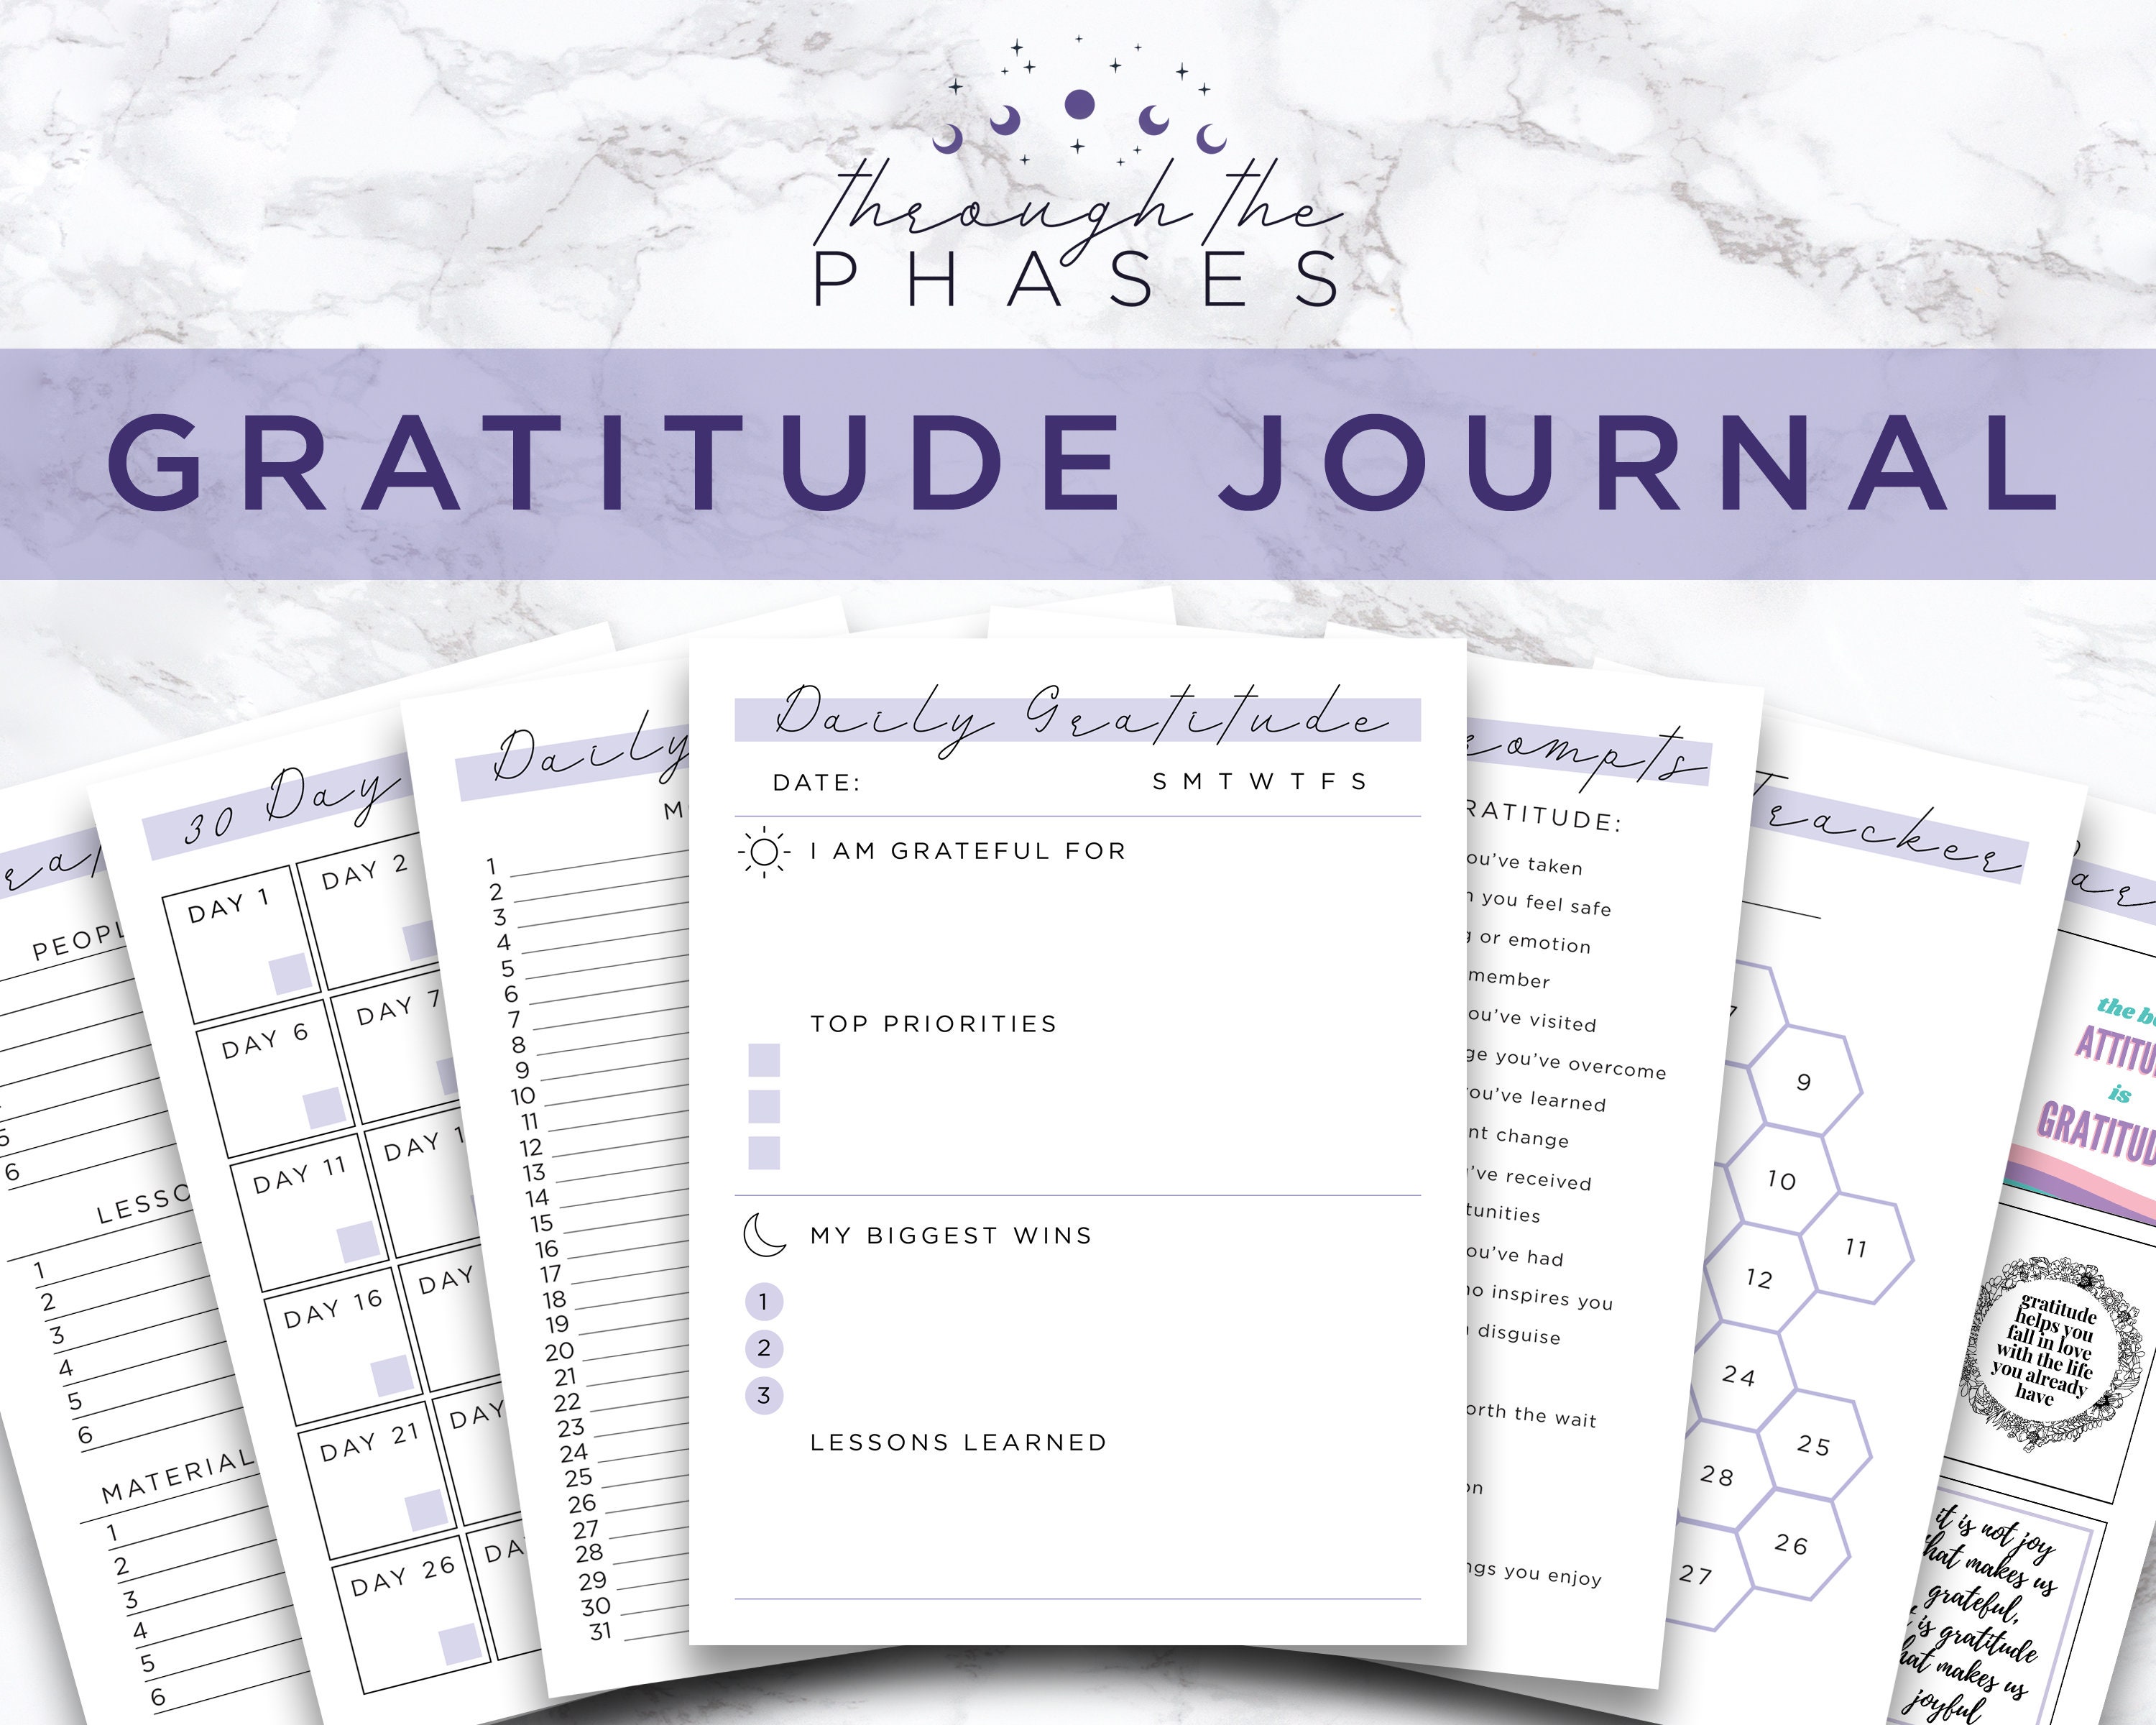  Personal Gratitude Journal Planner Insert Refill, 3.74